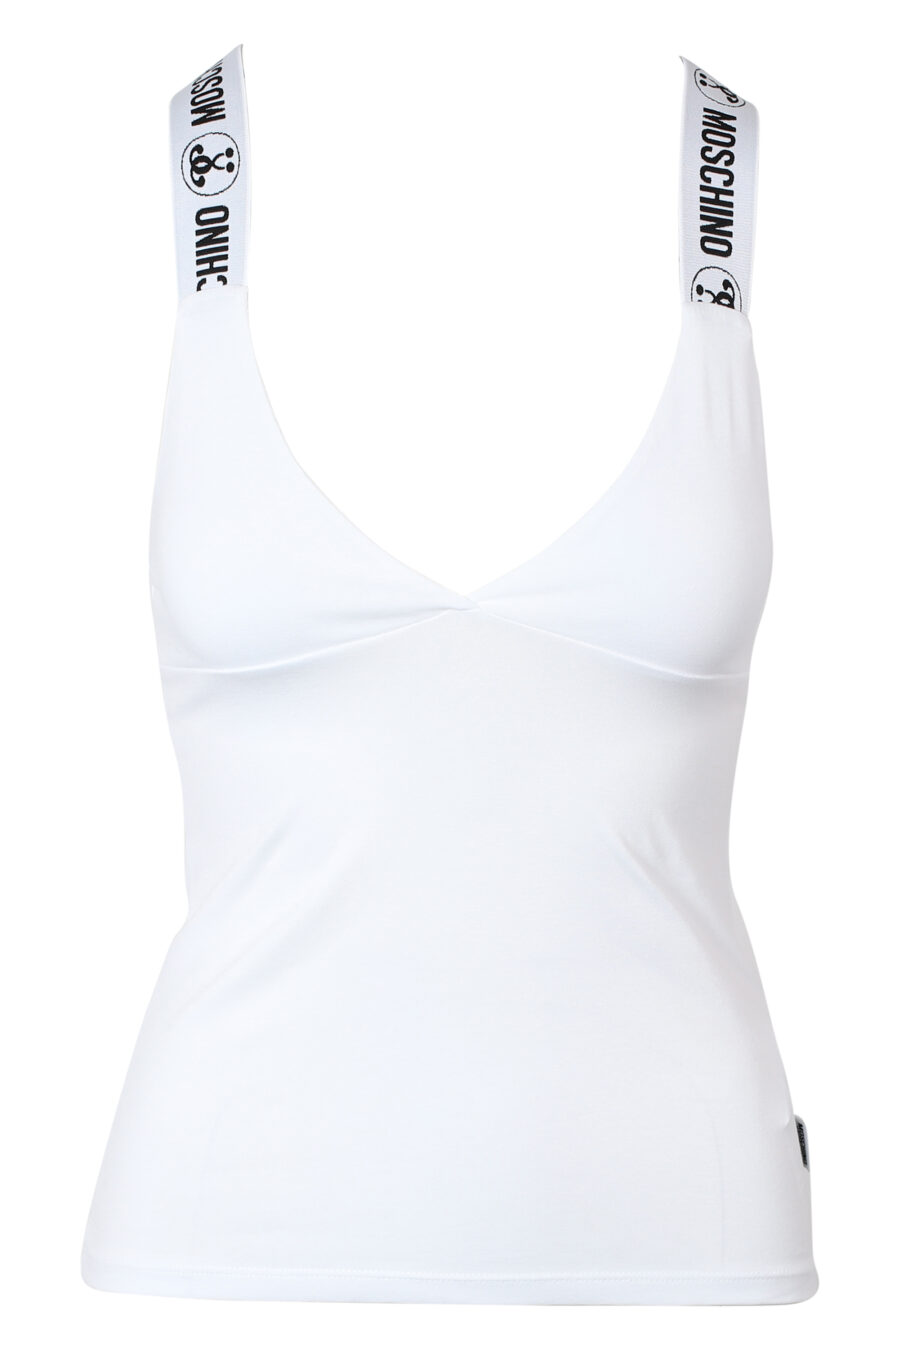 Camiseta sin mangas blanca con logo en tirantes - IMG 9842